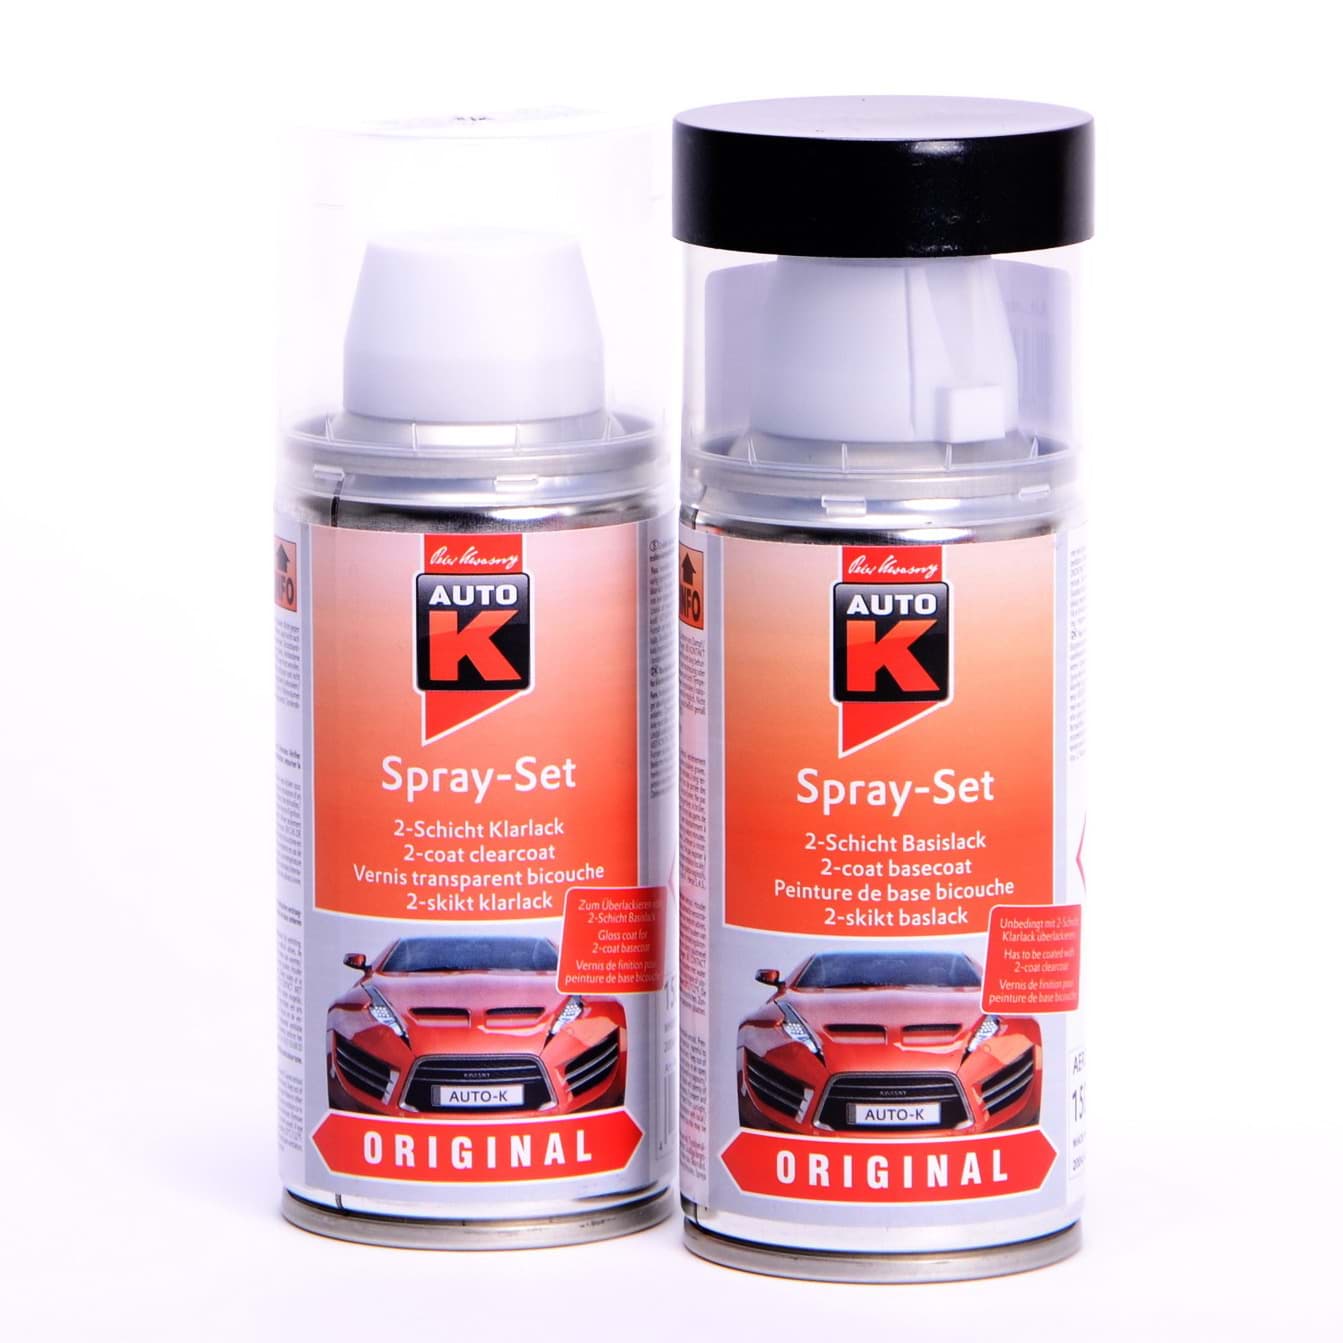 Auto-K Spray-Set Autolack für Volkswagen, VW, Audi LW5Z Jazzblue perl met 20789 resmi